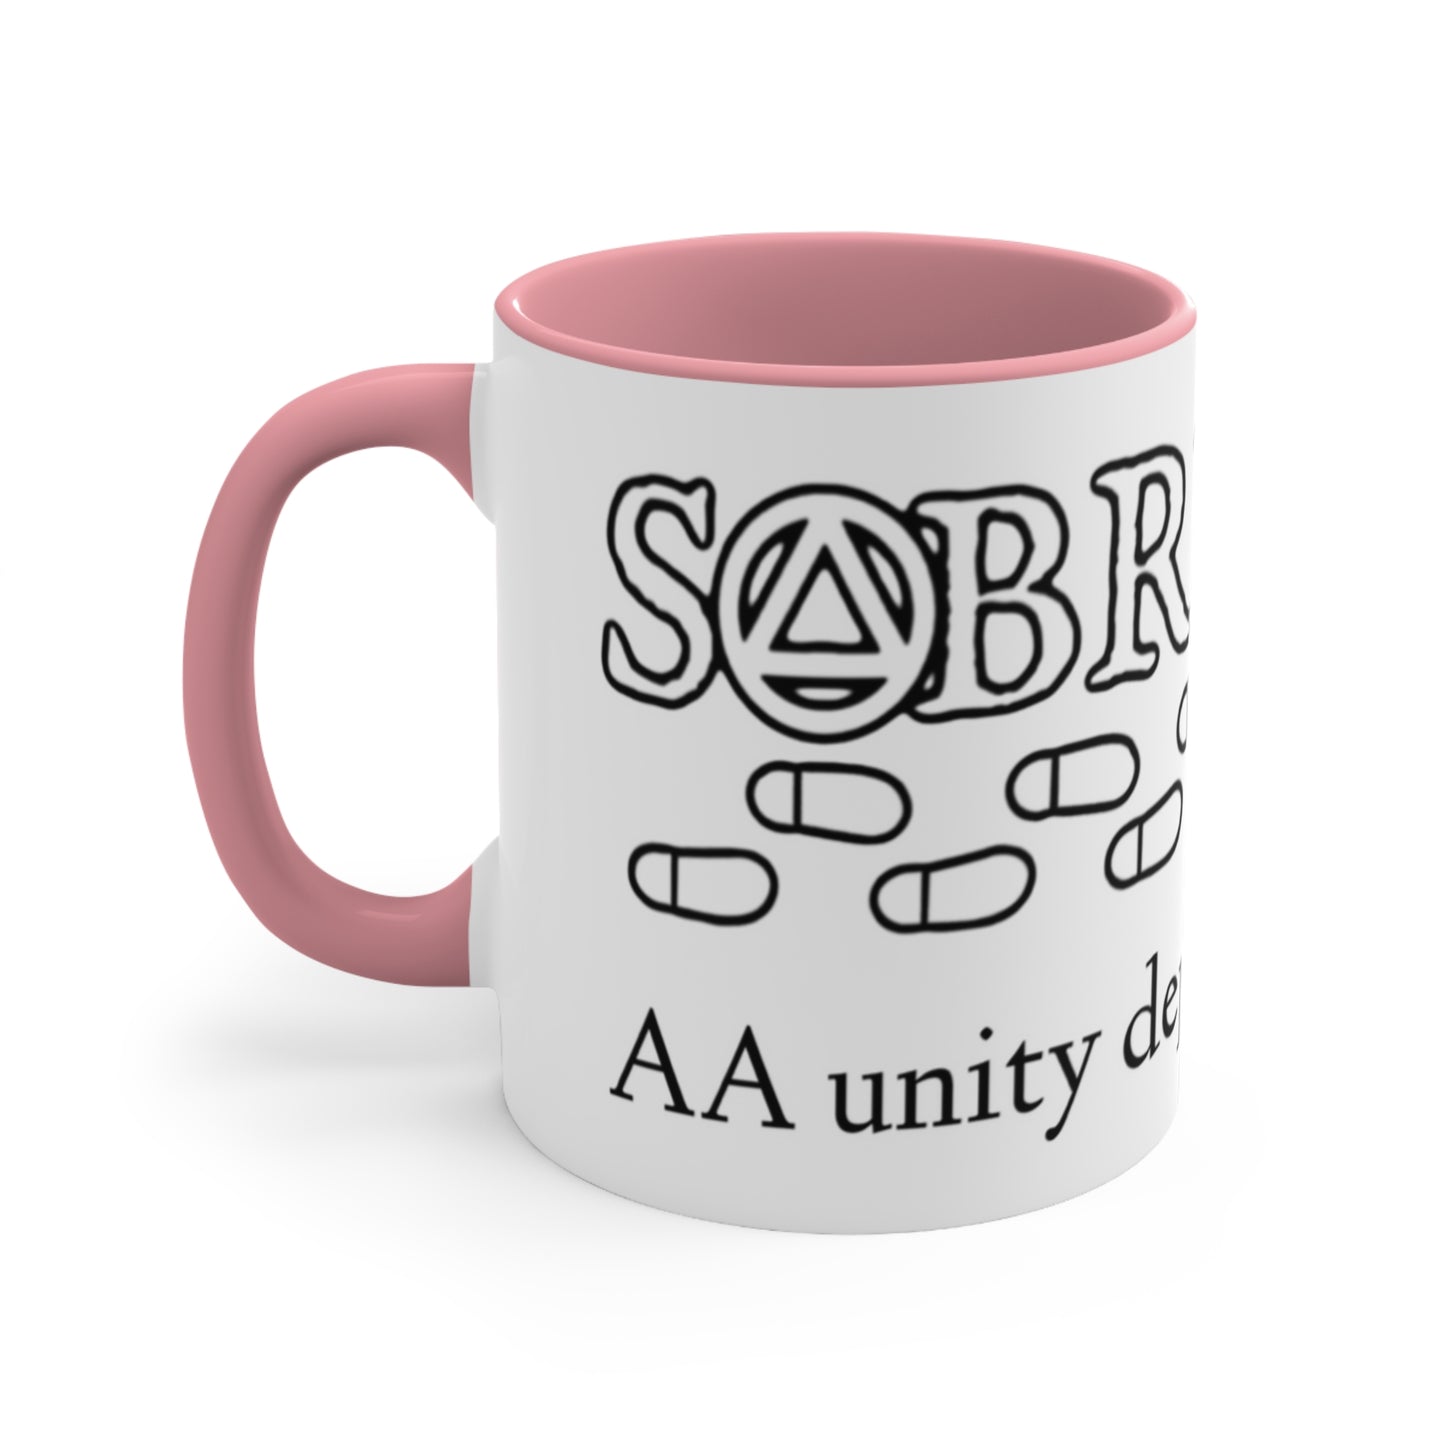 “AA unity depends on coffee.” Accent Coffee Mug, 11oz.  Sobriaatee